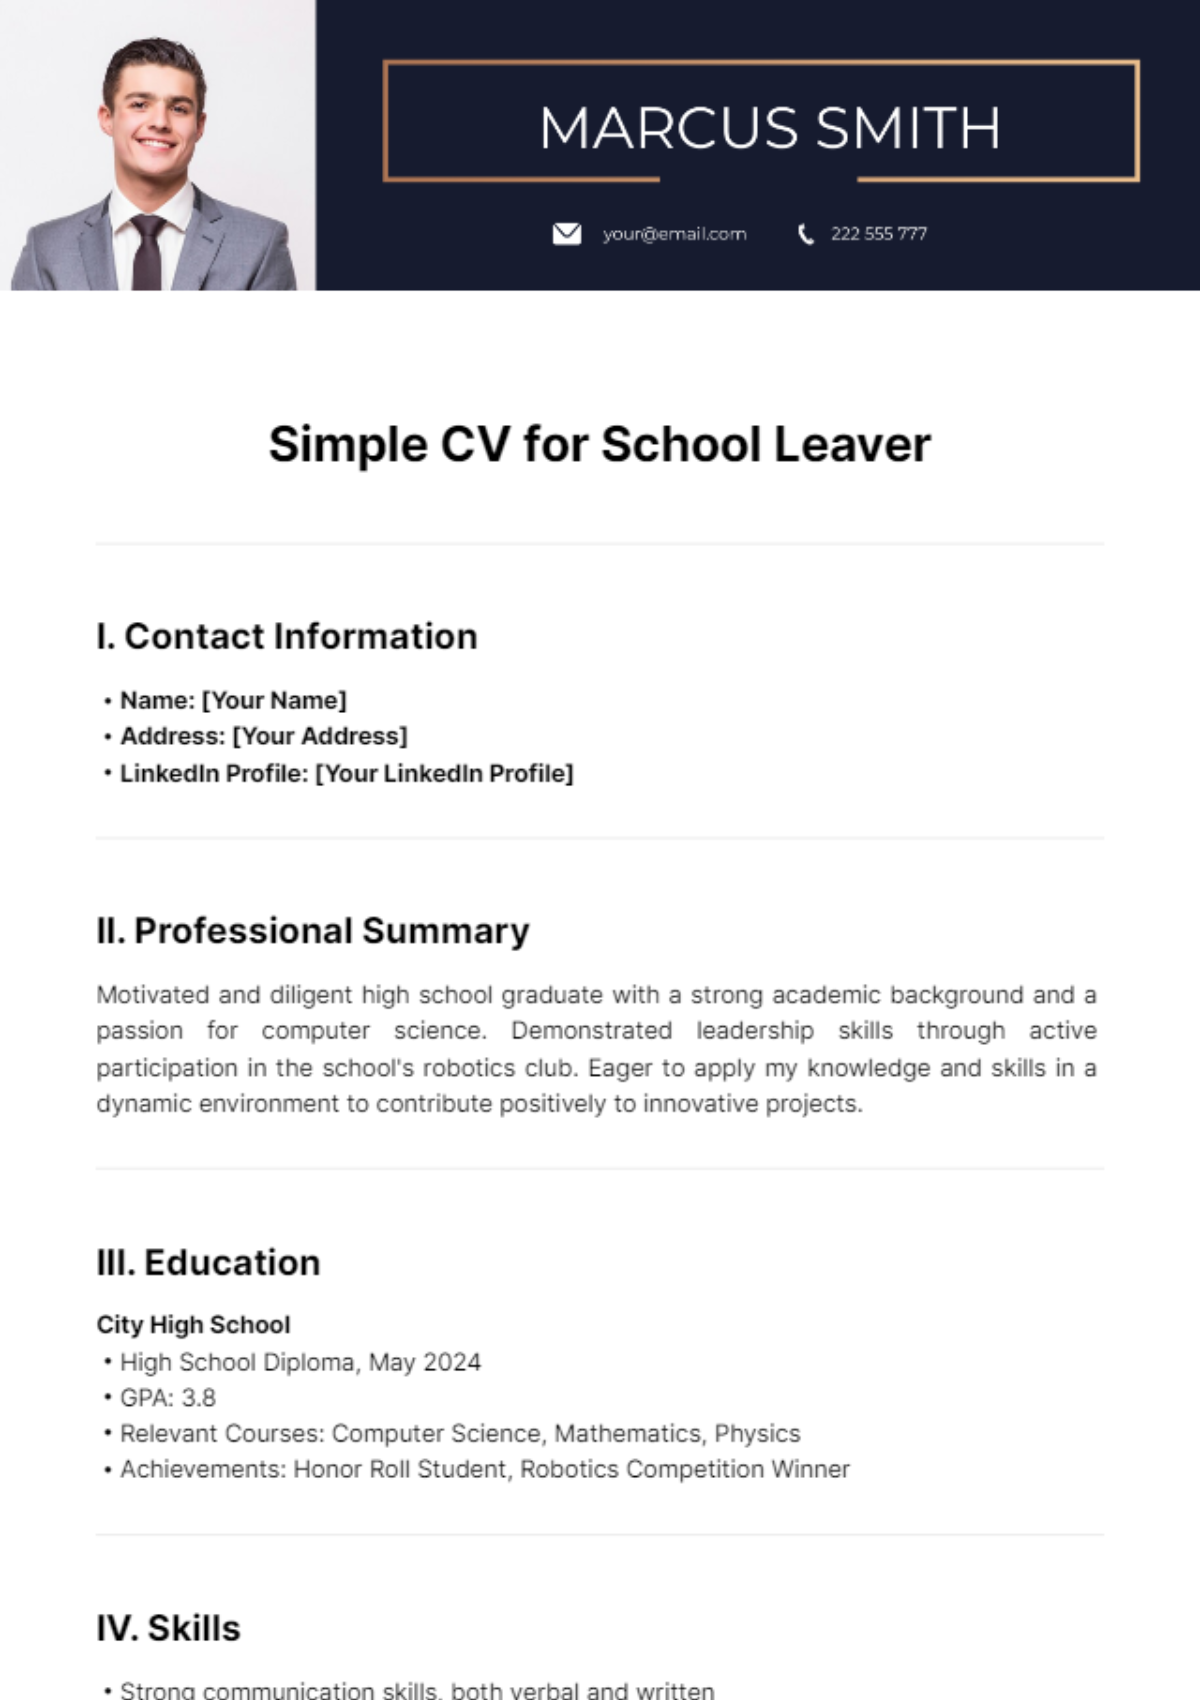 Simple CV for School Leaver Template